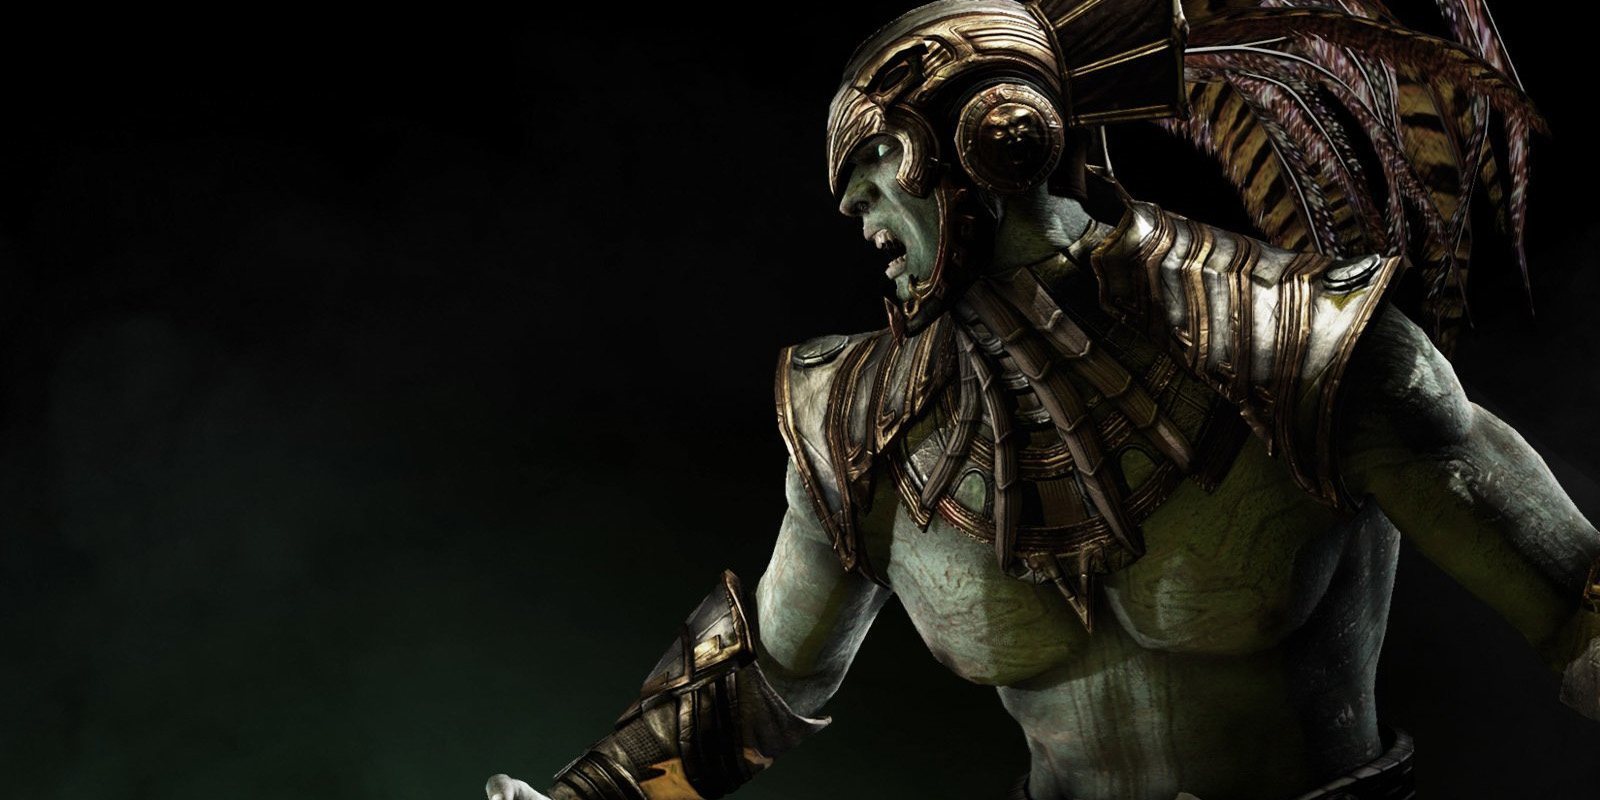 Kotal Kahn desvelado como personaje jugable para 'Mortal Kombat 11'